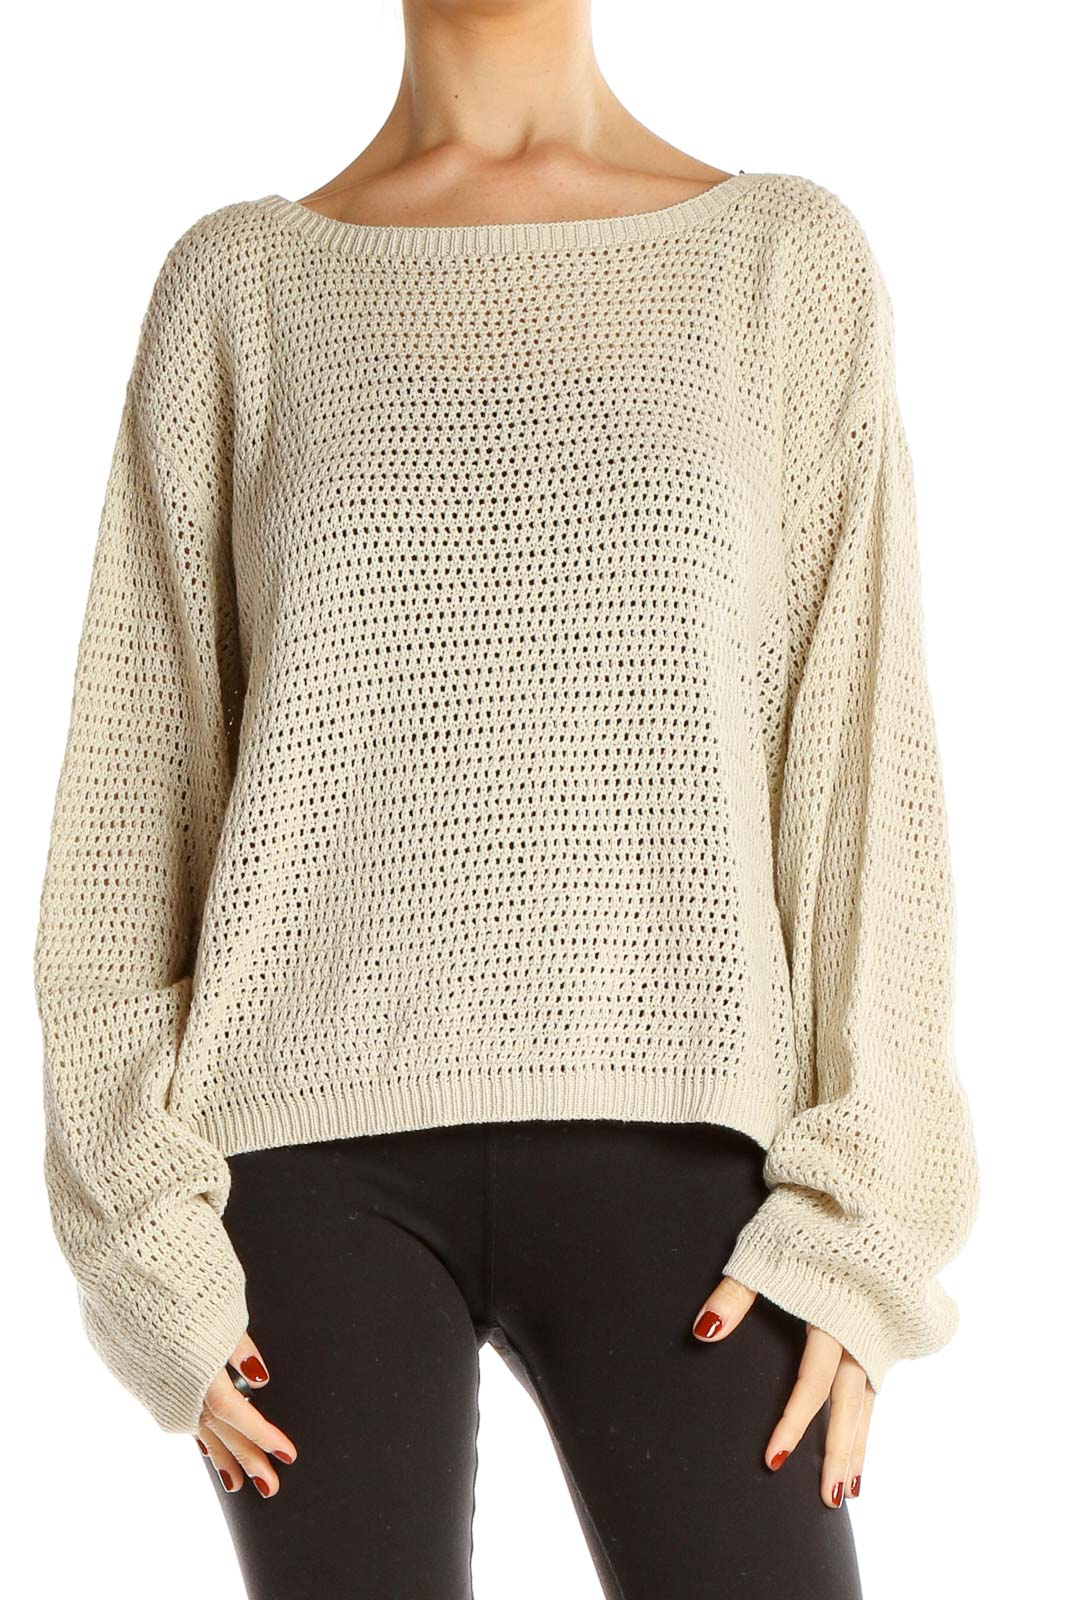 Beige Light Sweater Front